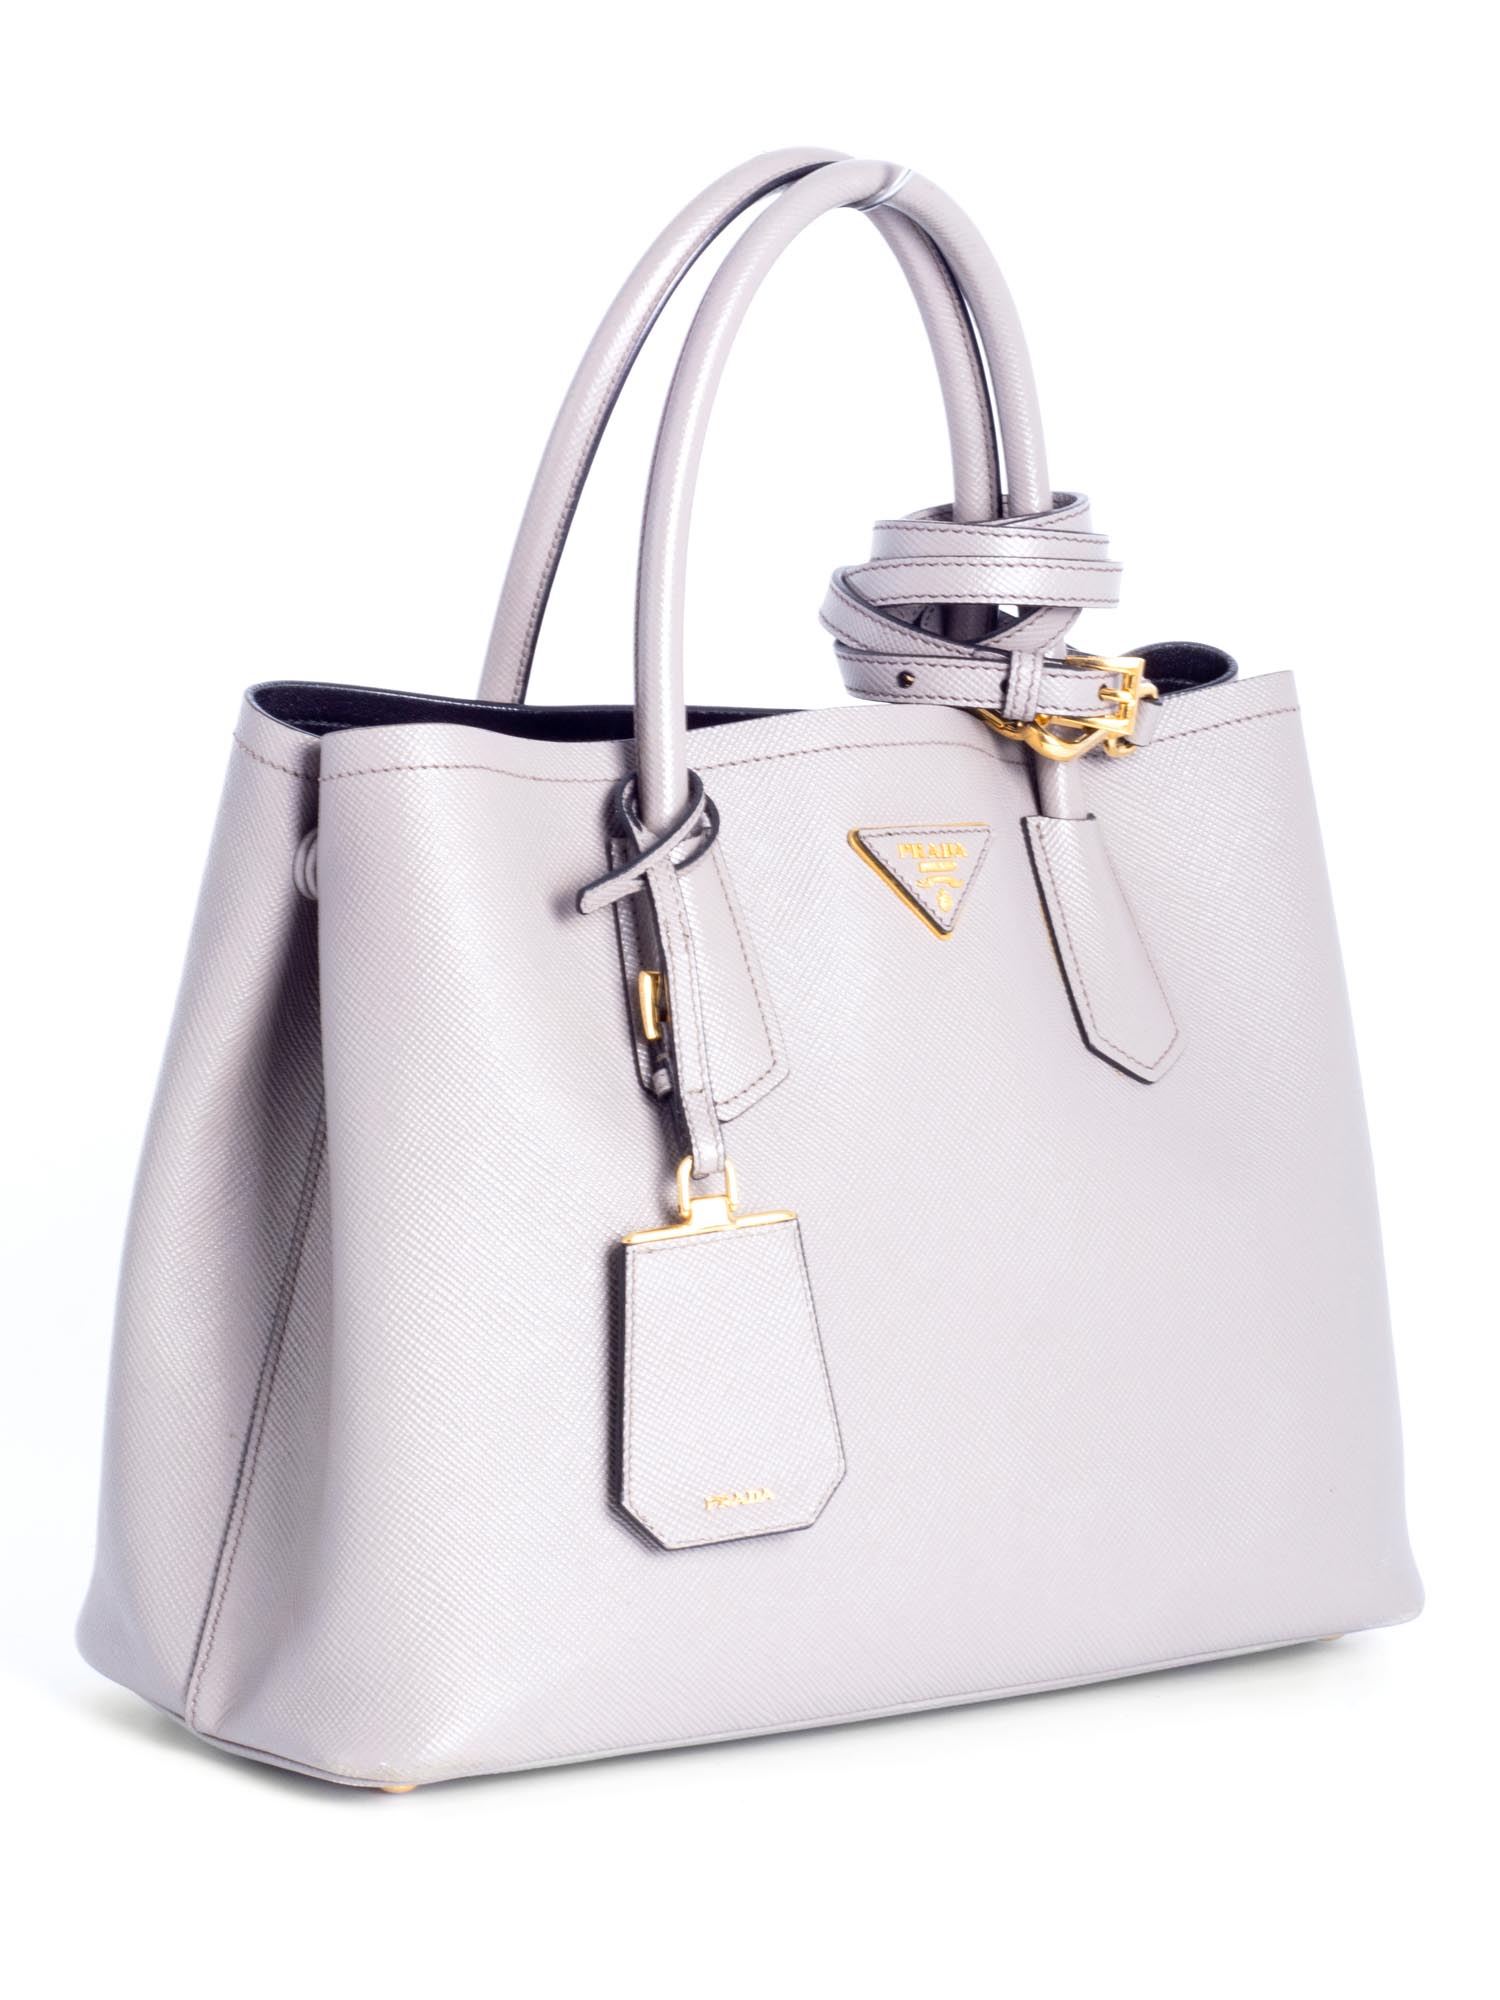 Prada Saffiano Leather Top Handle Shopper Bag Grey-designer resale